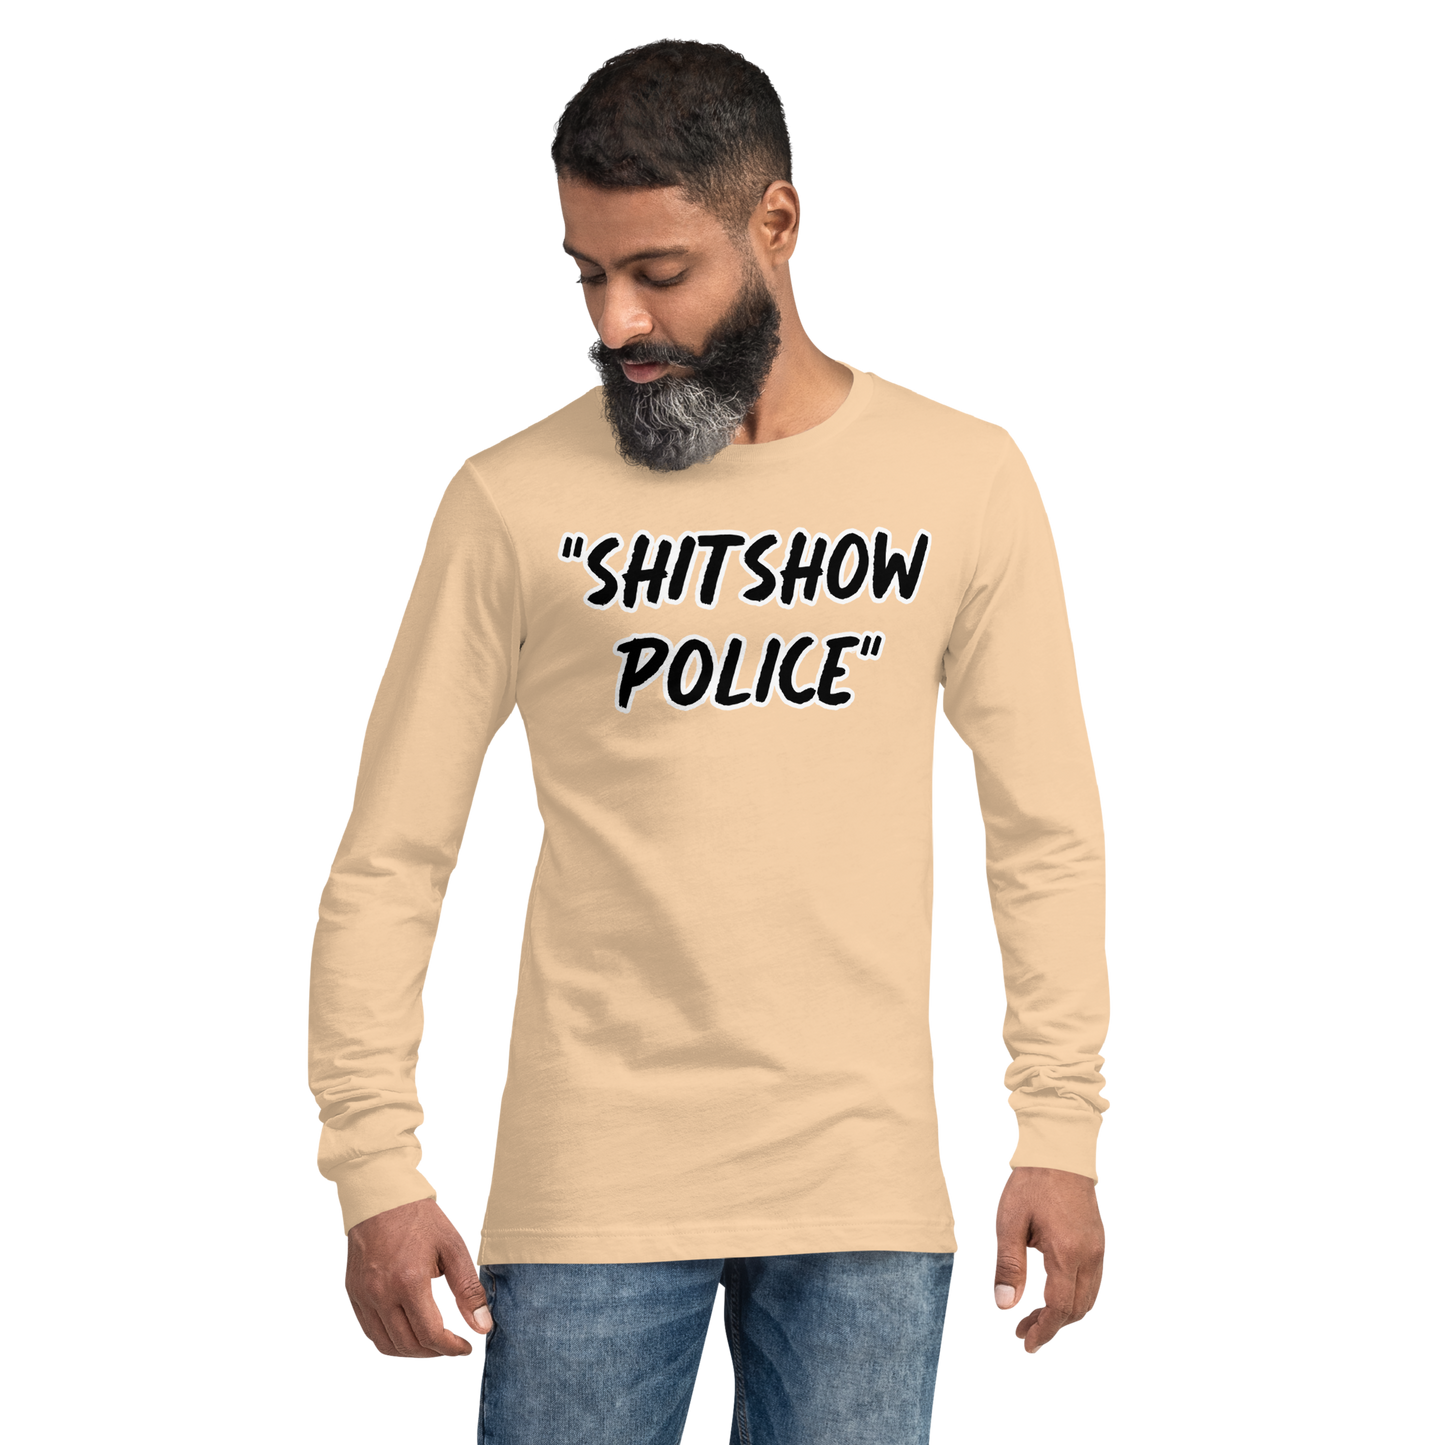 Police Show Long Sleeve Shirt